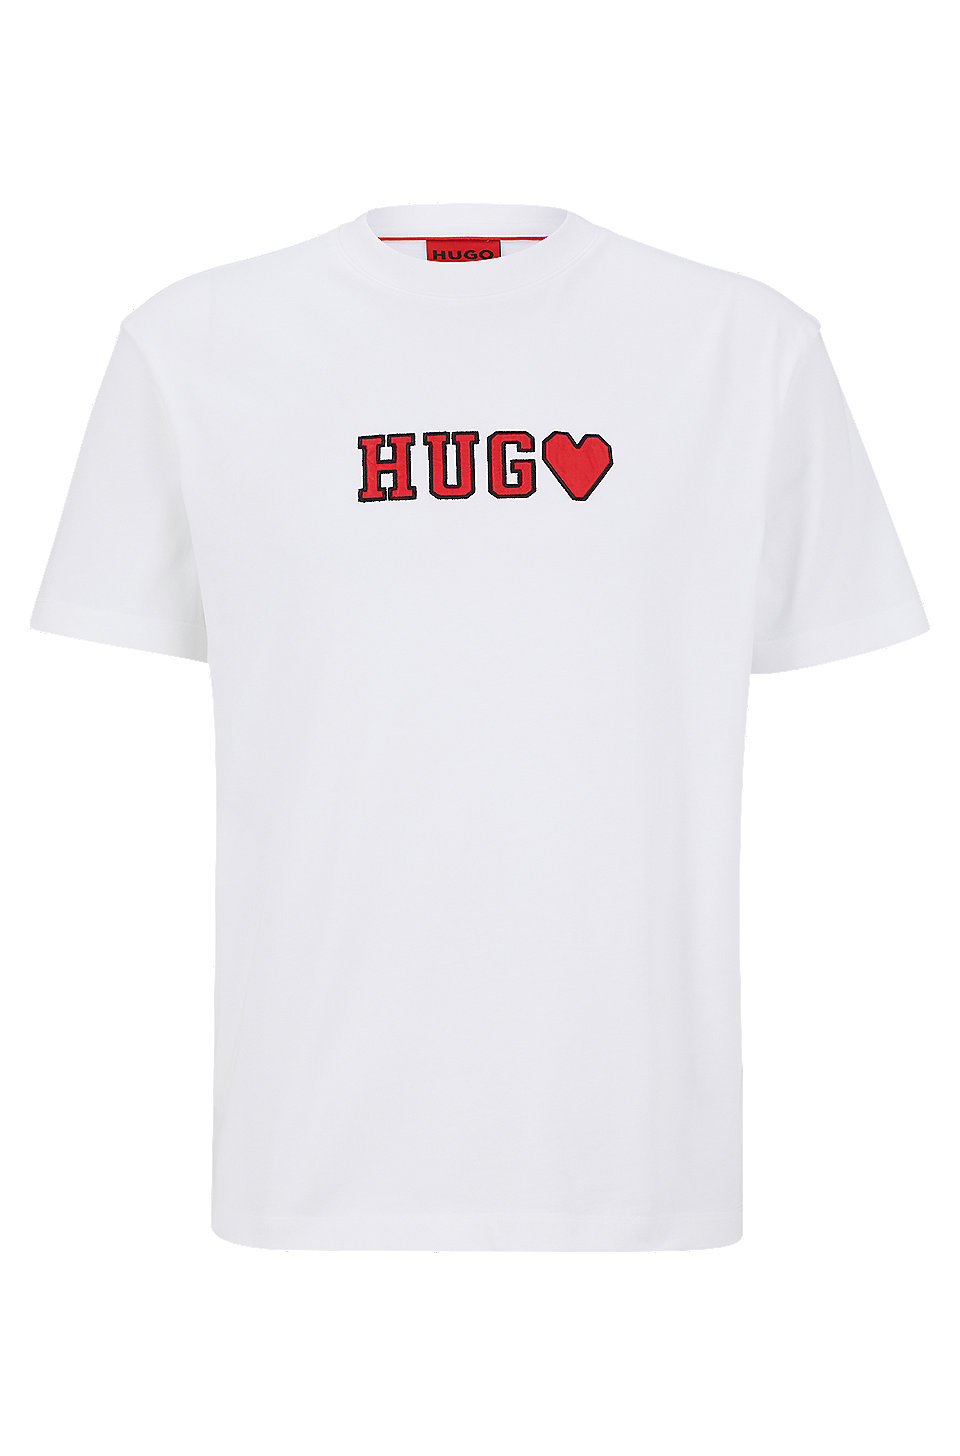 HUGO - Unisex cotton-jersey T-shirt with logo artwork